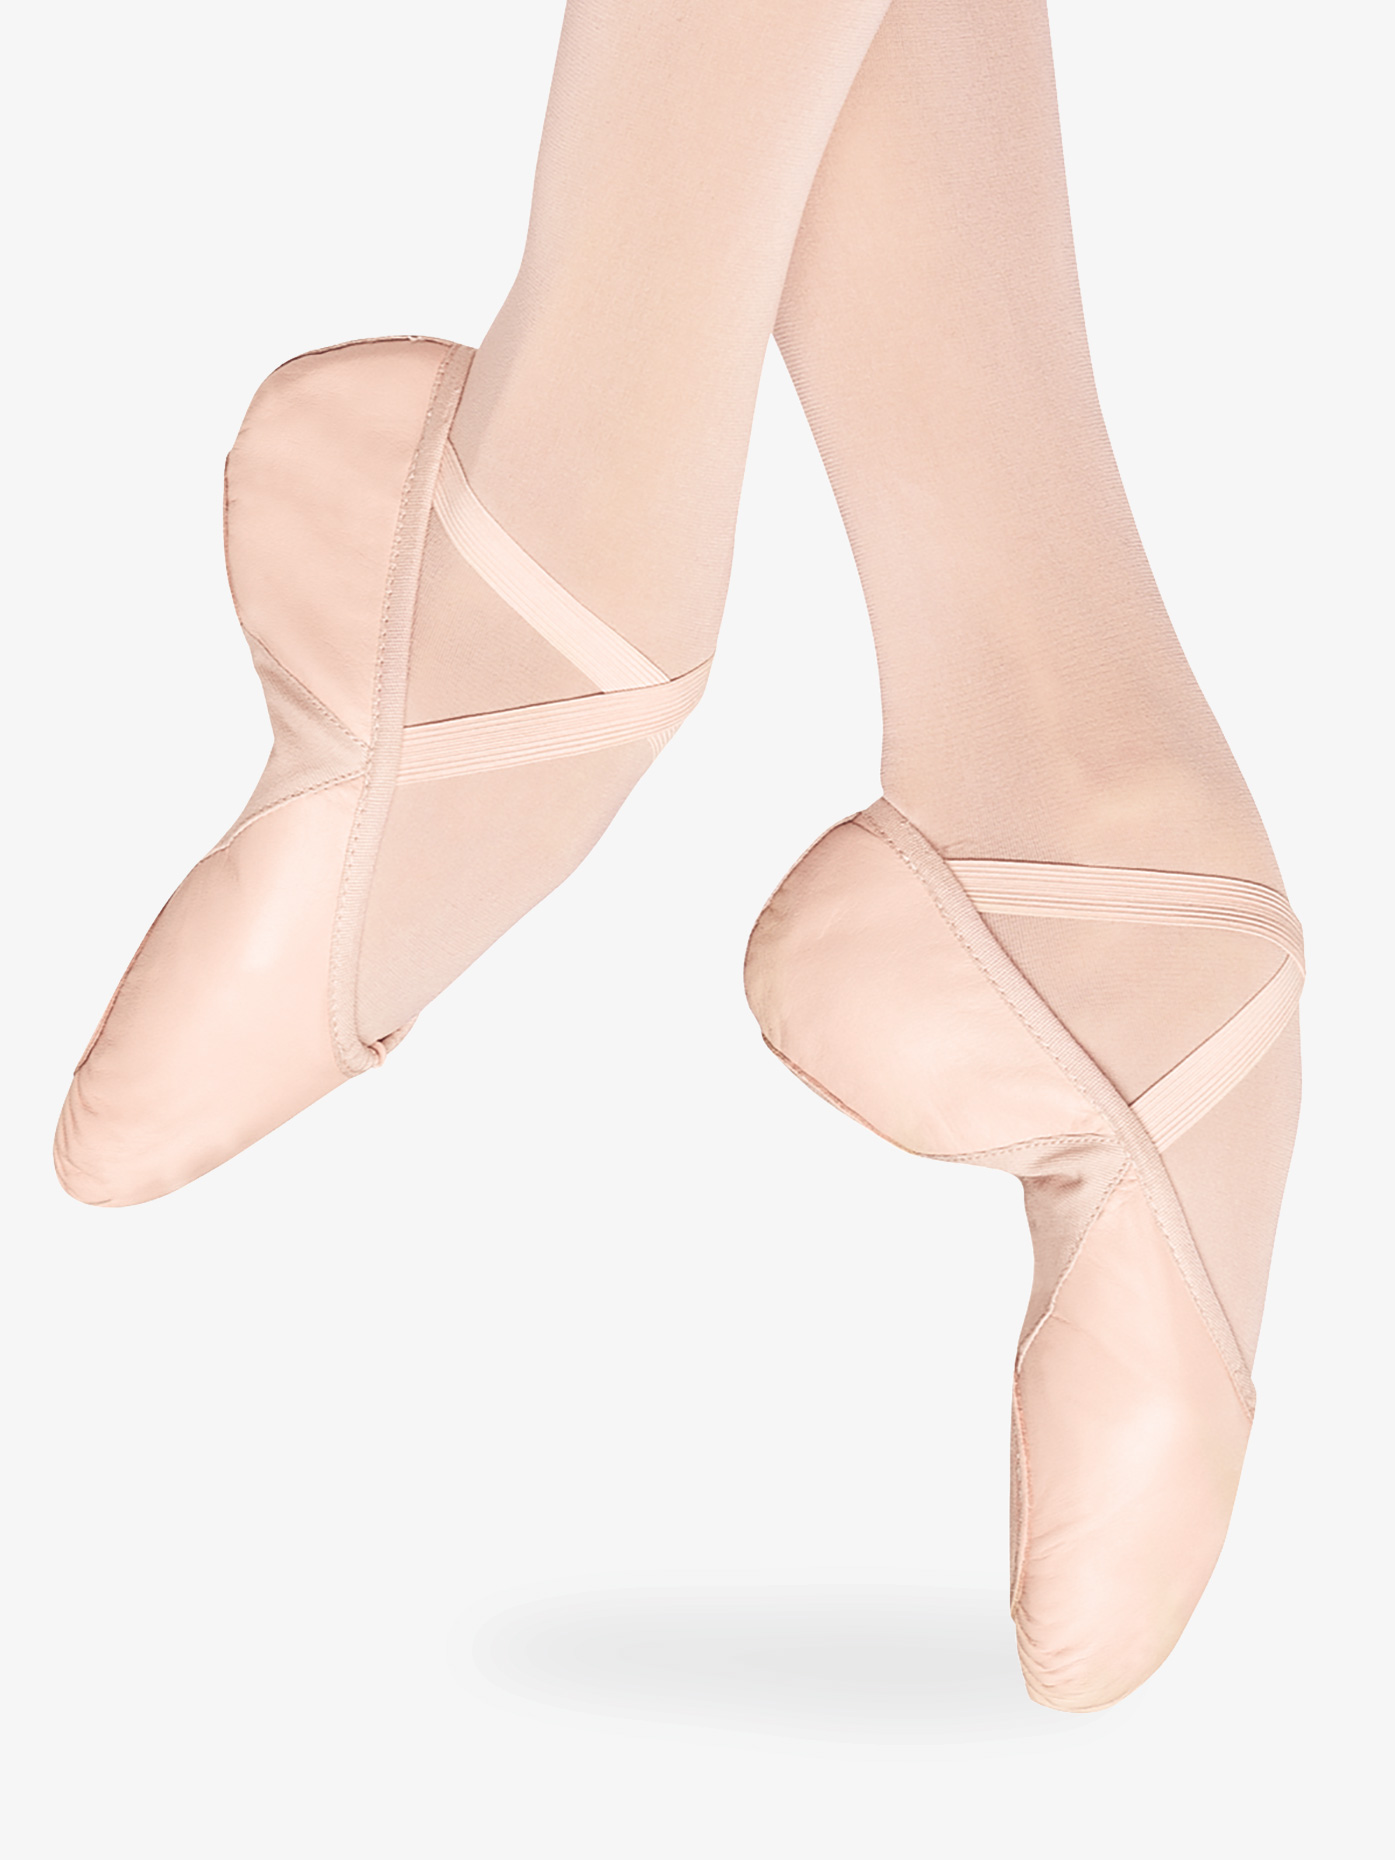 8B New! Women's Bloch Dansoft Ballet Dance Shoes Pink Leather 7E